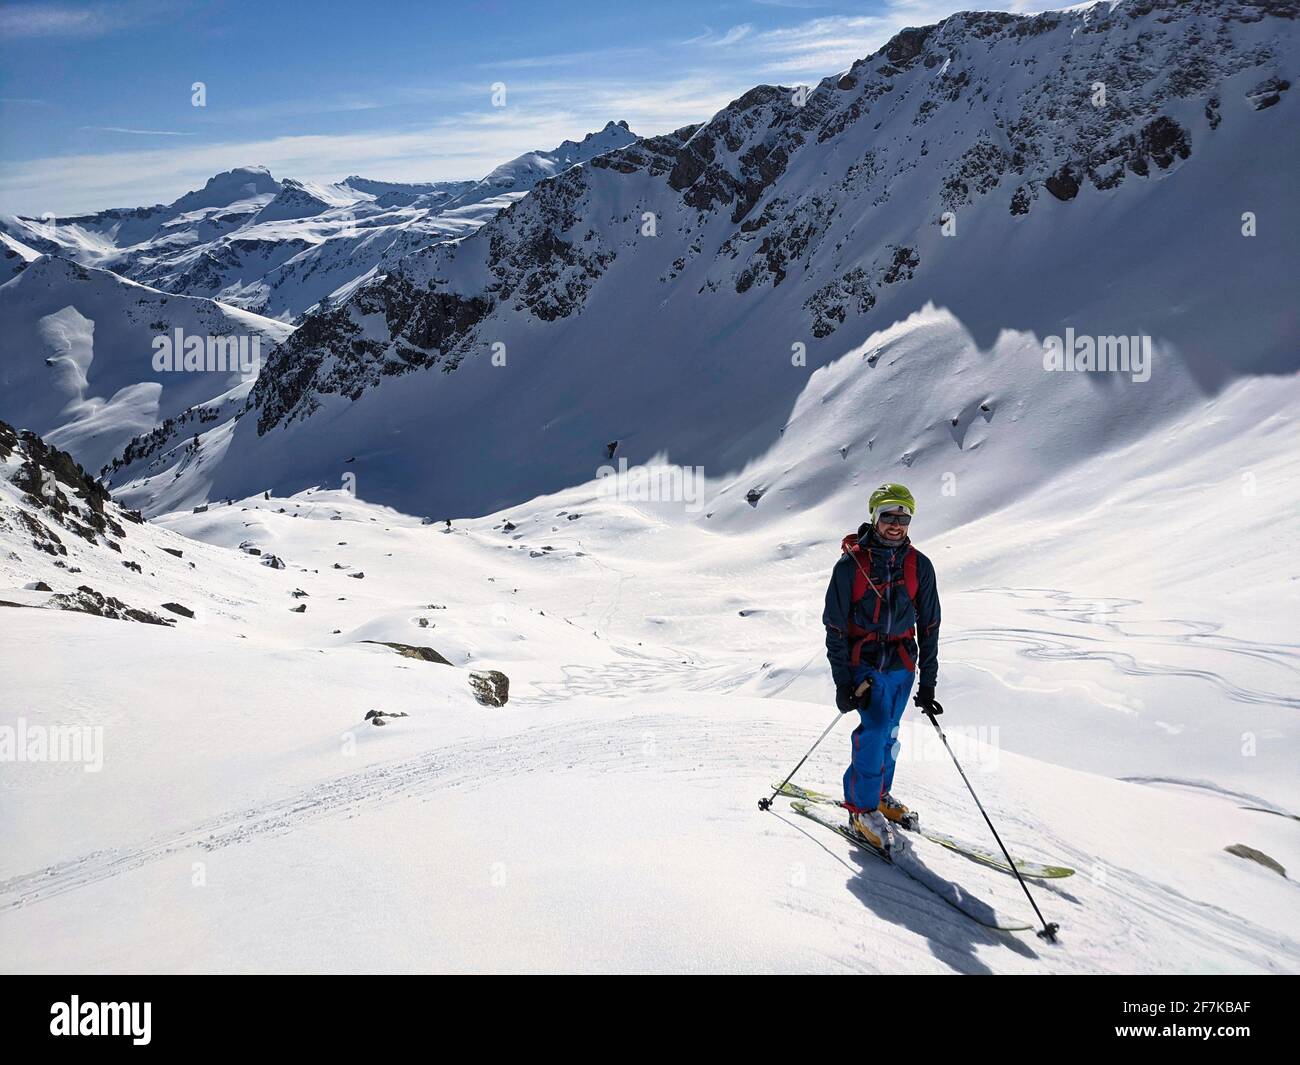 Freeride in powder snow in the murtschen valley above Elm. Big mountains in Switzerland. Ski touring mountaineering Stock Photo